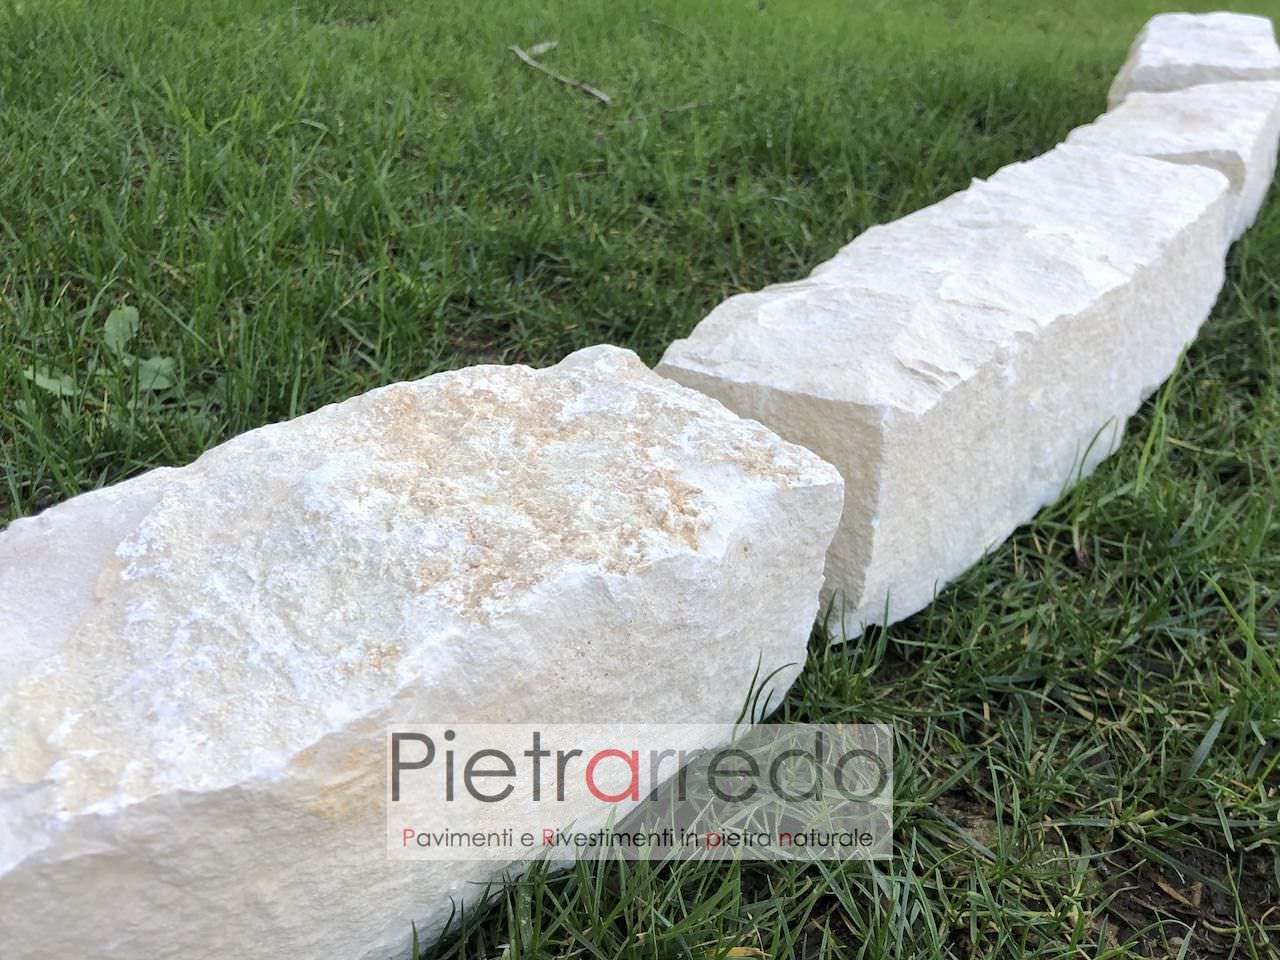 Mattoni in pietra Trani 30x15x5-32 pz muro pavimento cordolo bordura giardino 